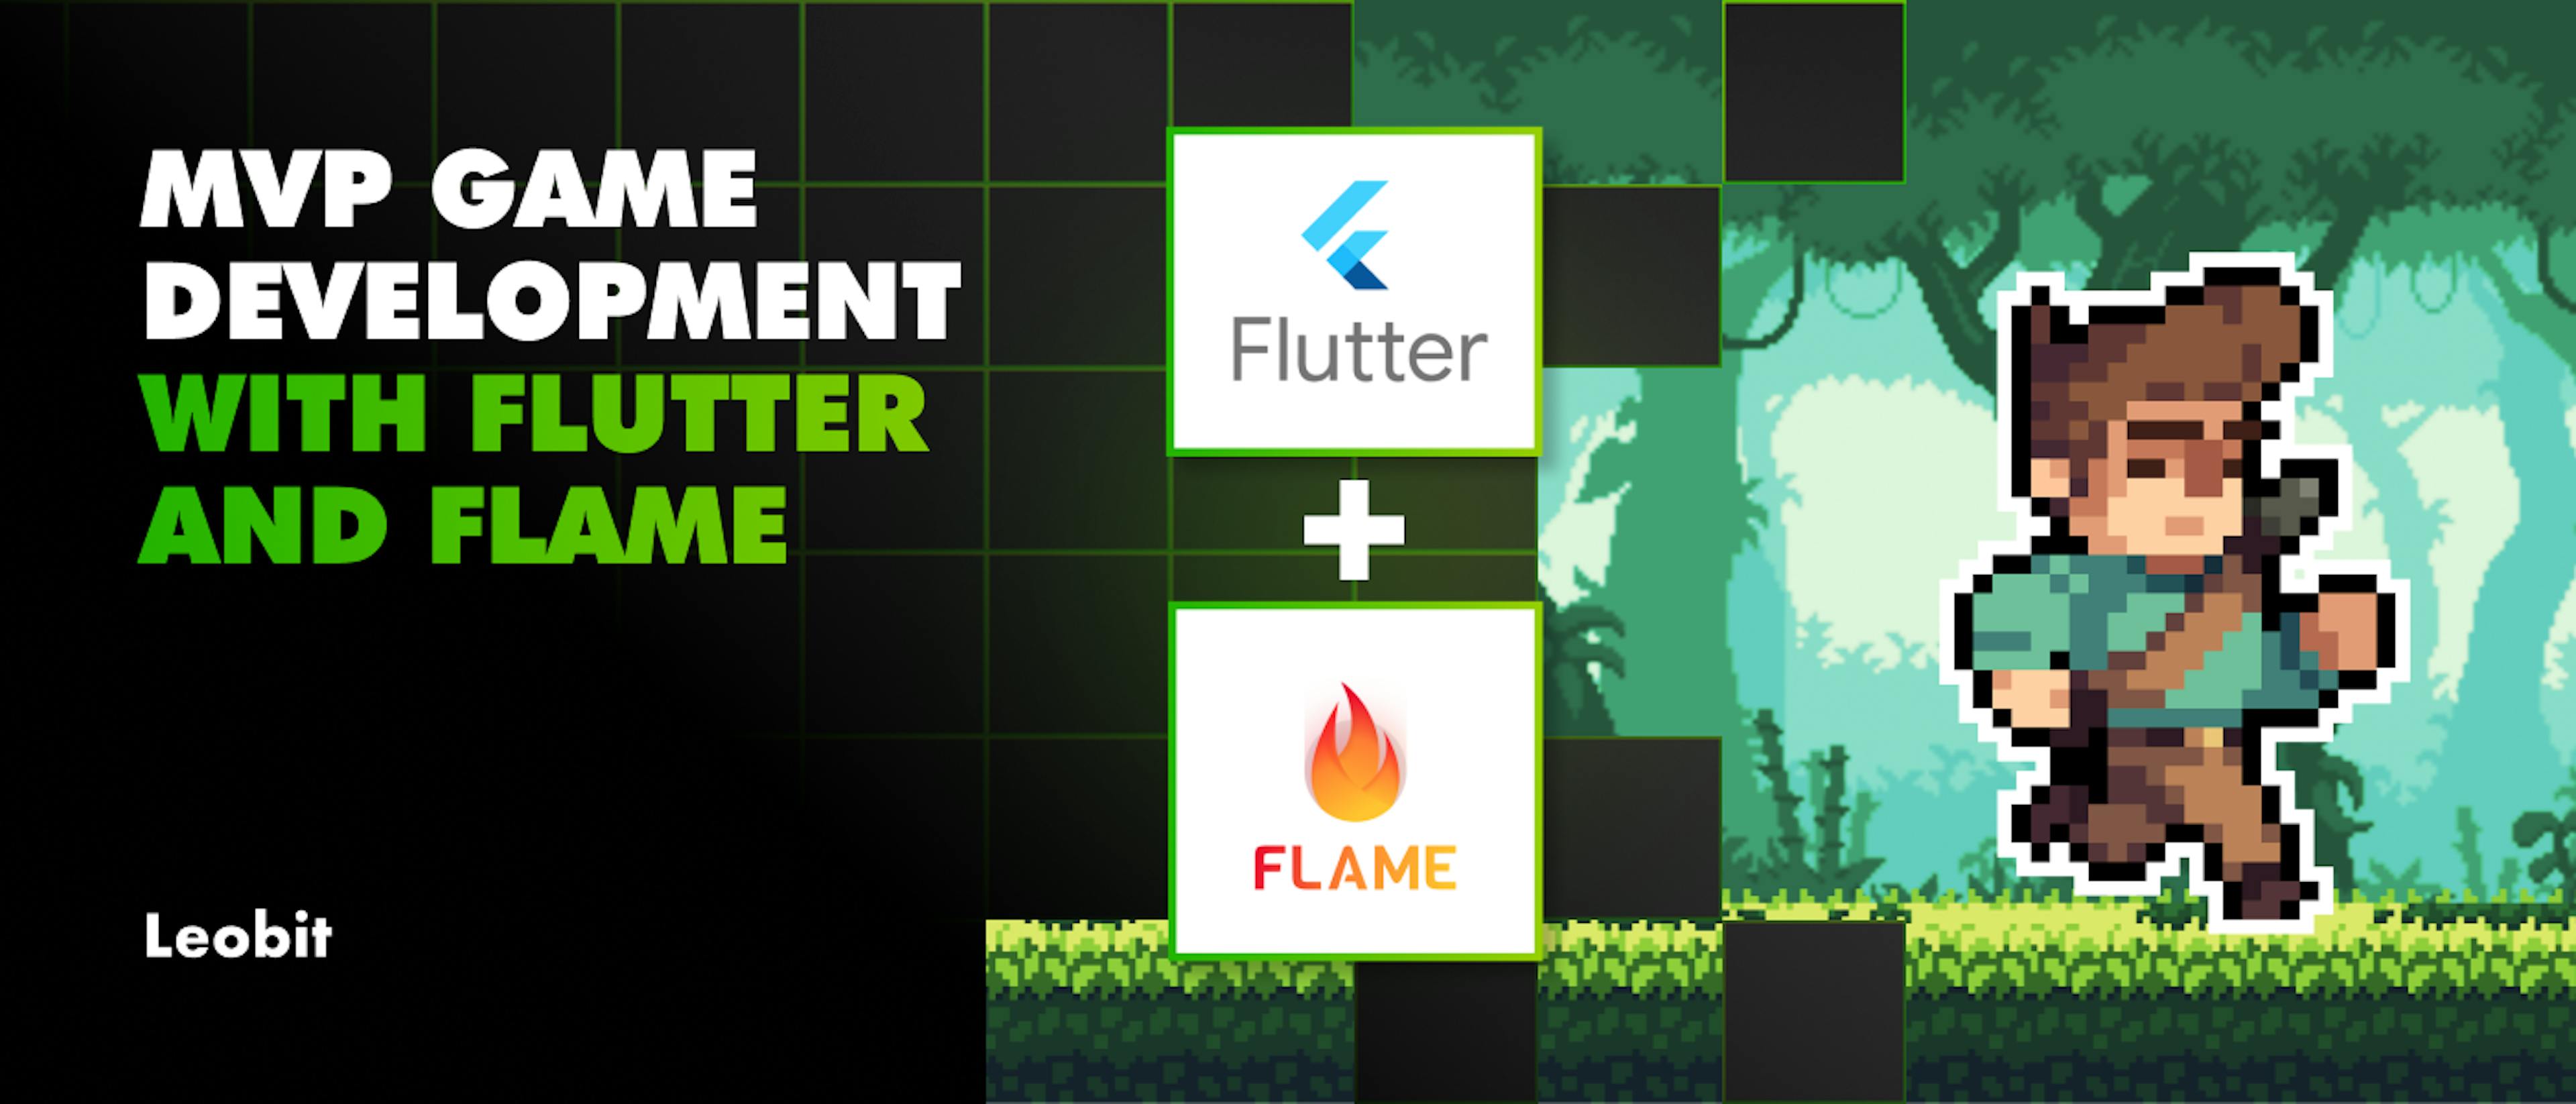 featured image - Flutter と Flame を使用した MVP ゲーム開発